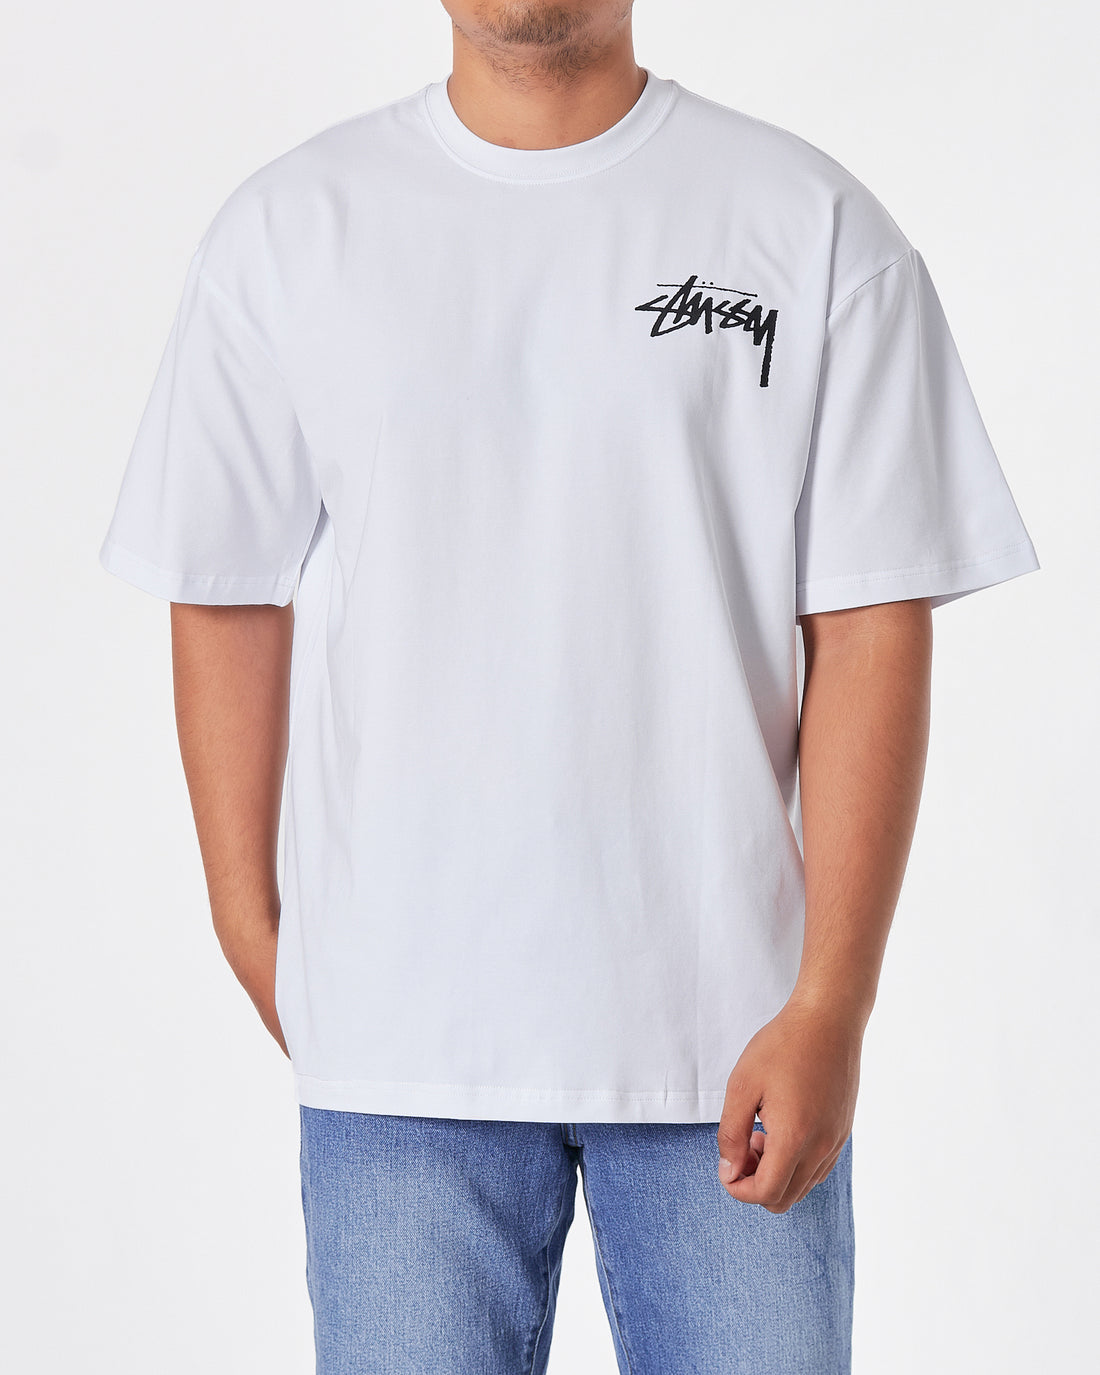 STU Deck 2 Men White T-Shirt 21.90